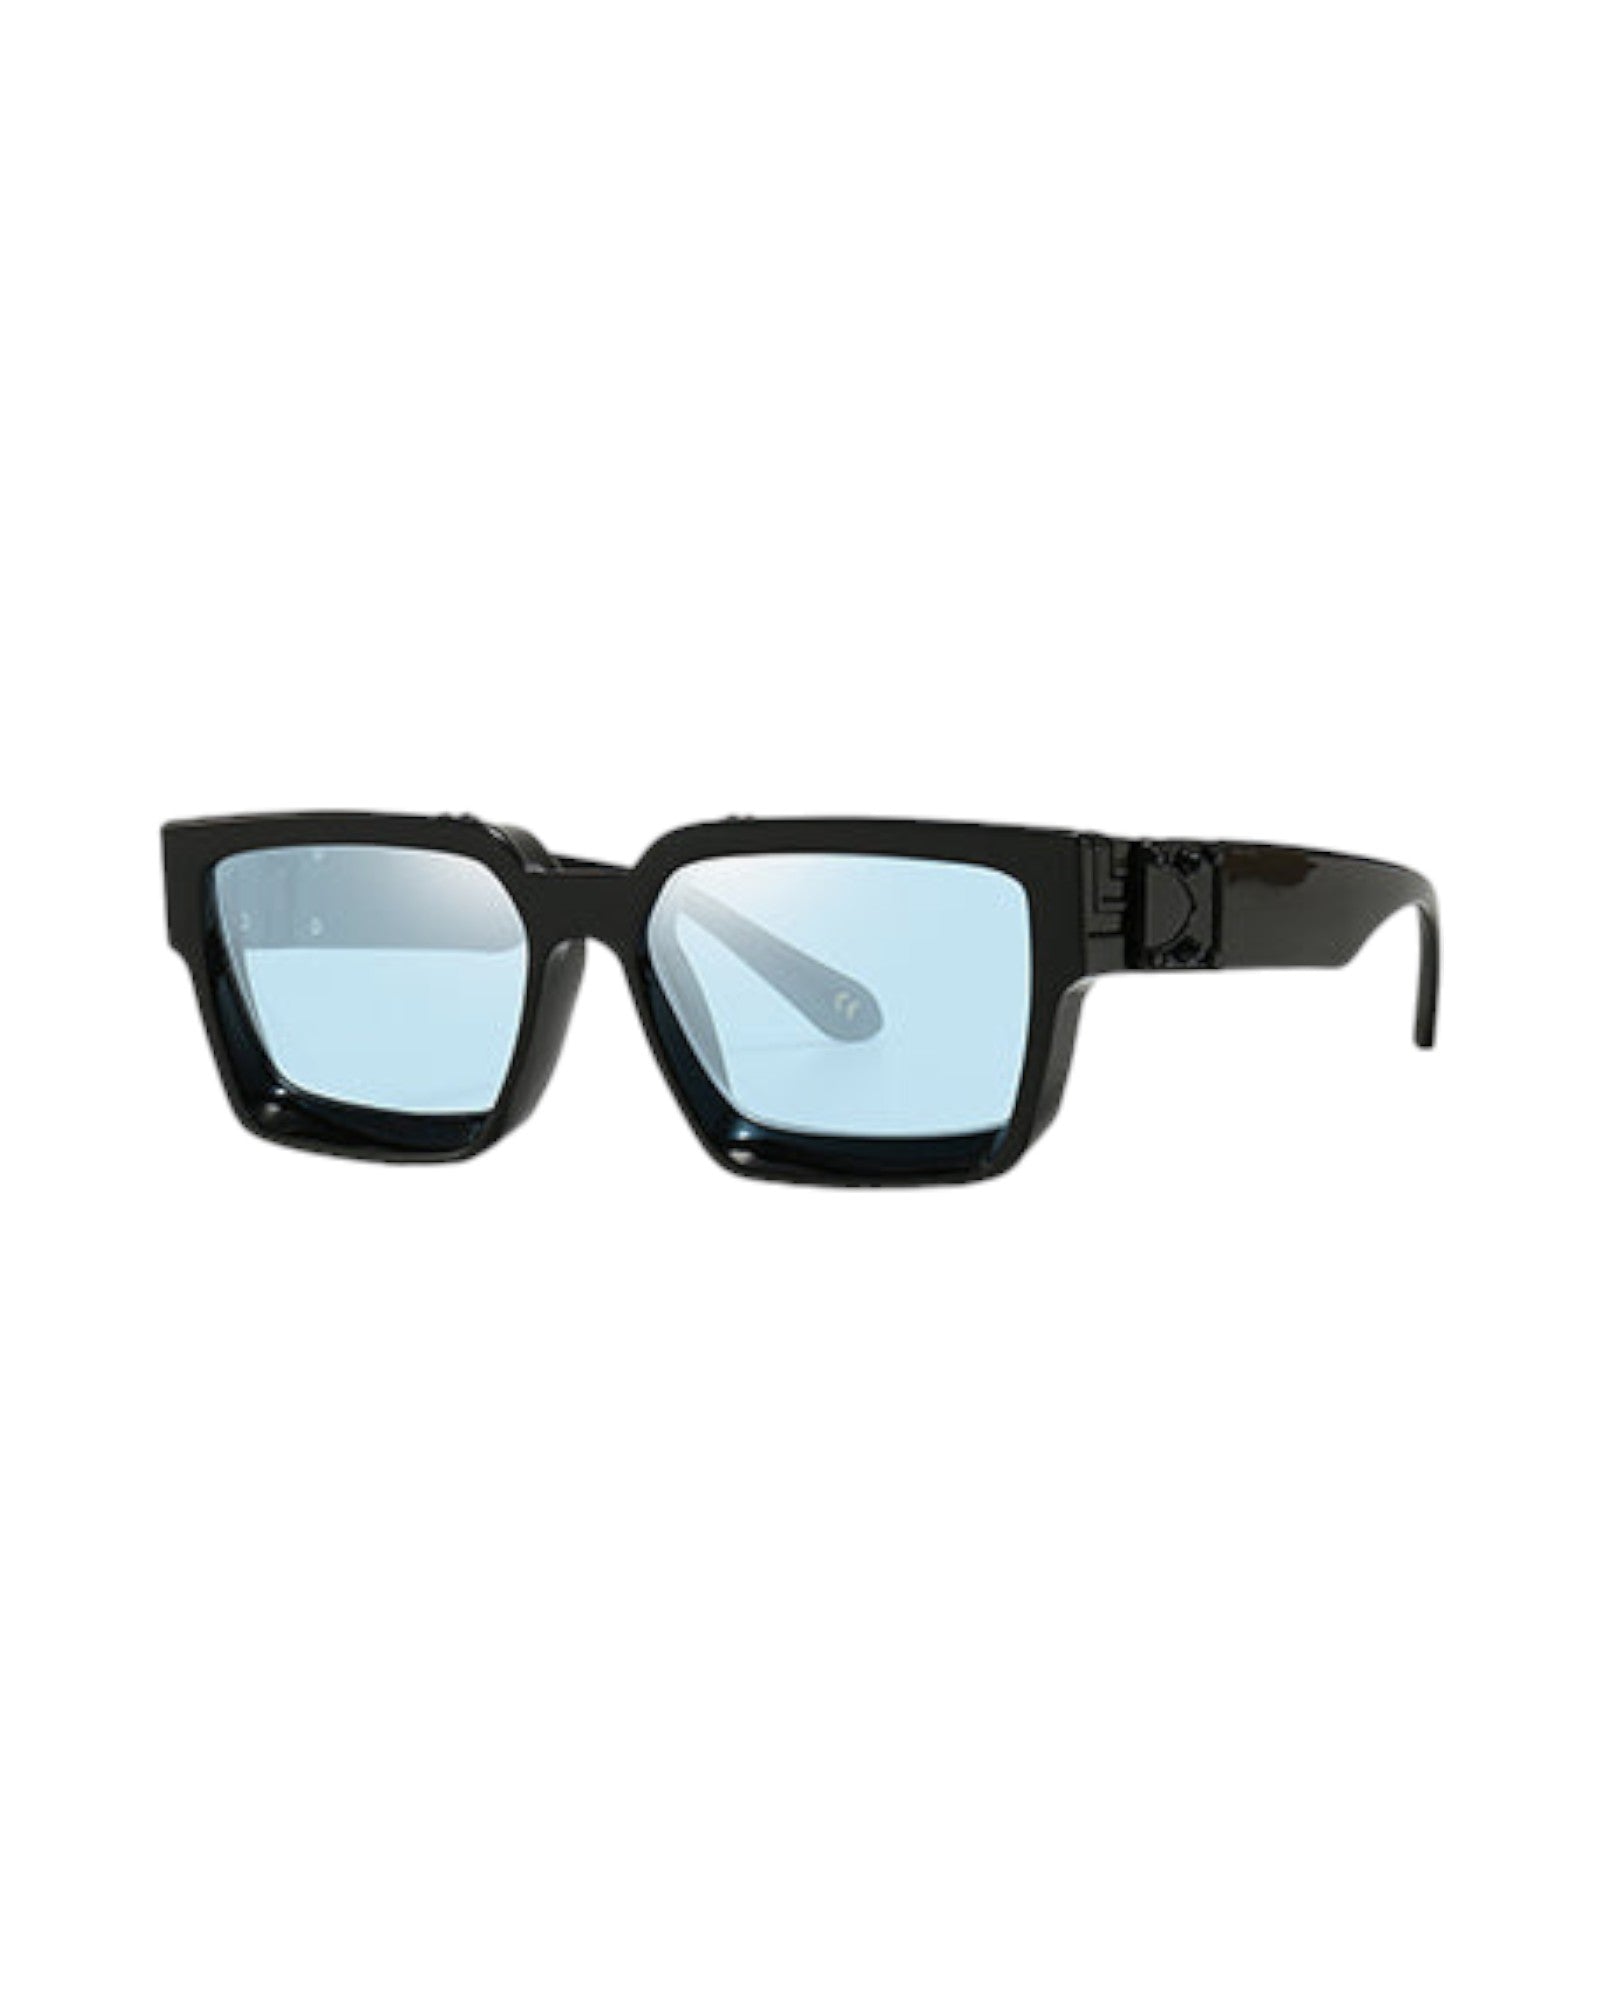 AUSTIN rectangular square sunglasses eyewear shades retro black frame blue lens festival fashion